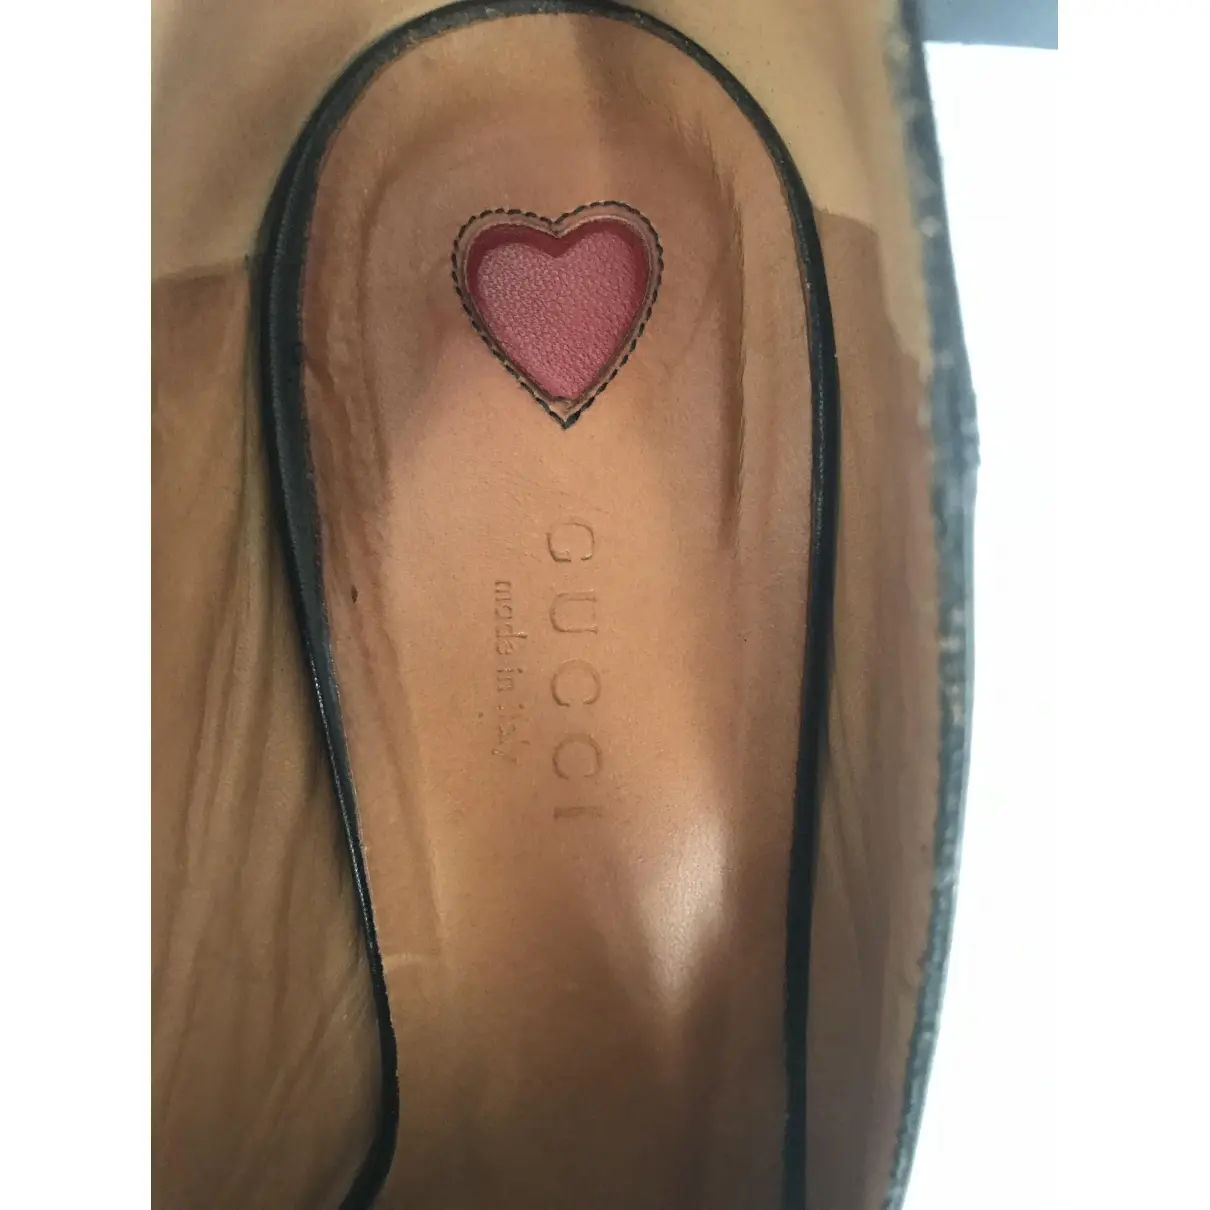 Buy Gucci Peyton leather heels online